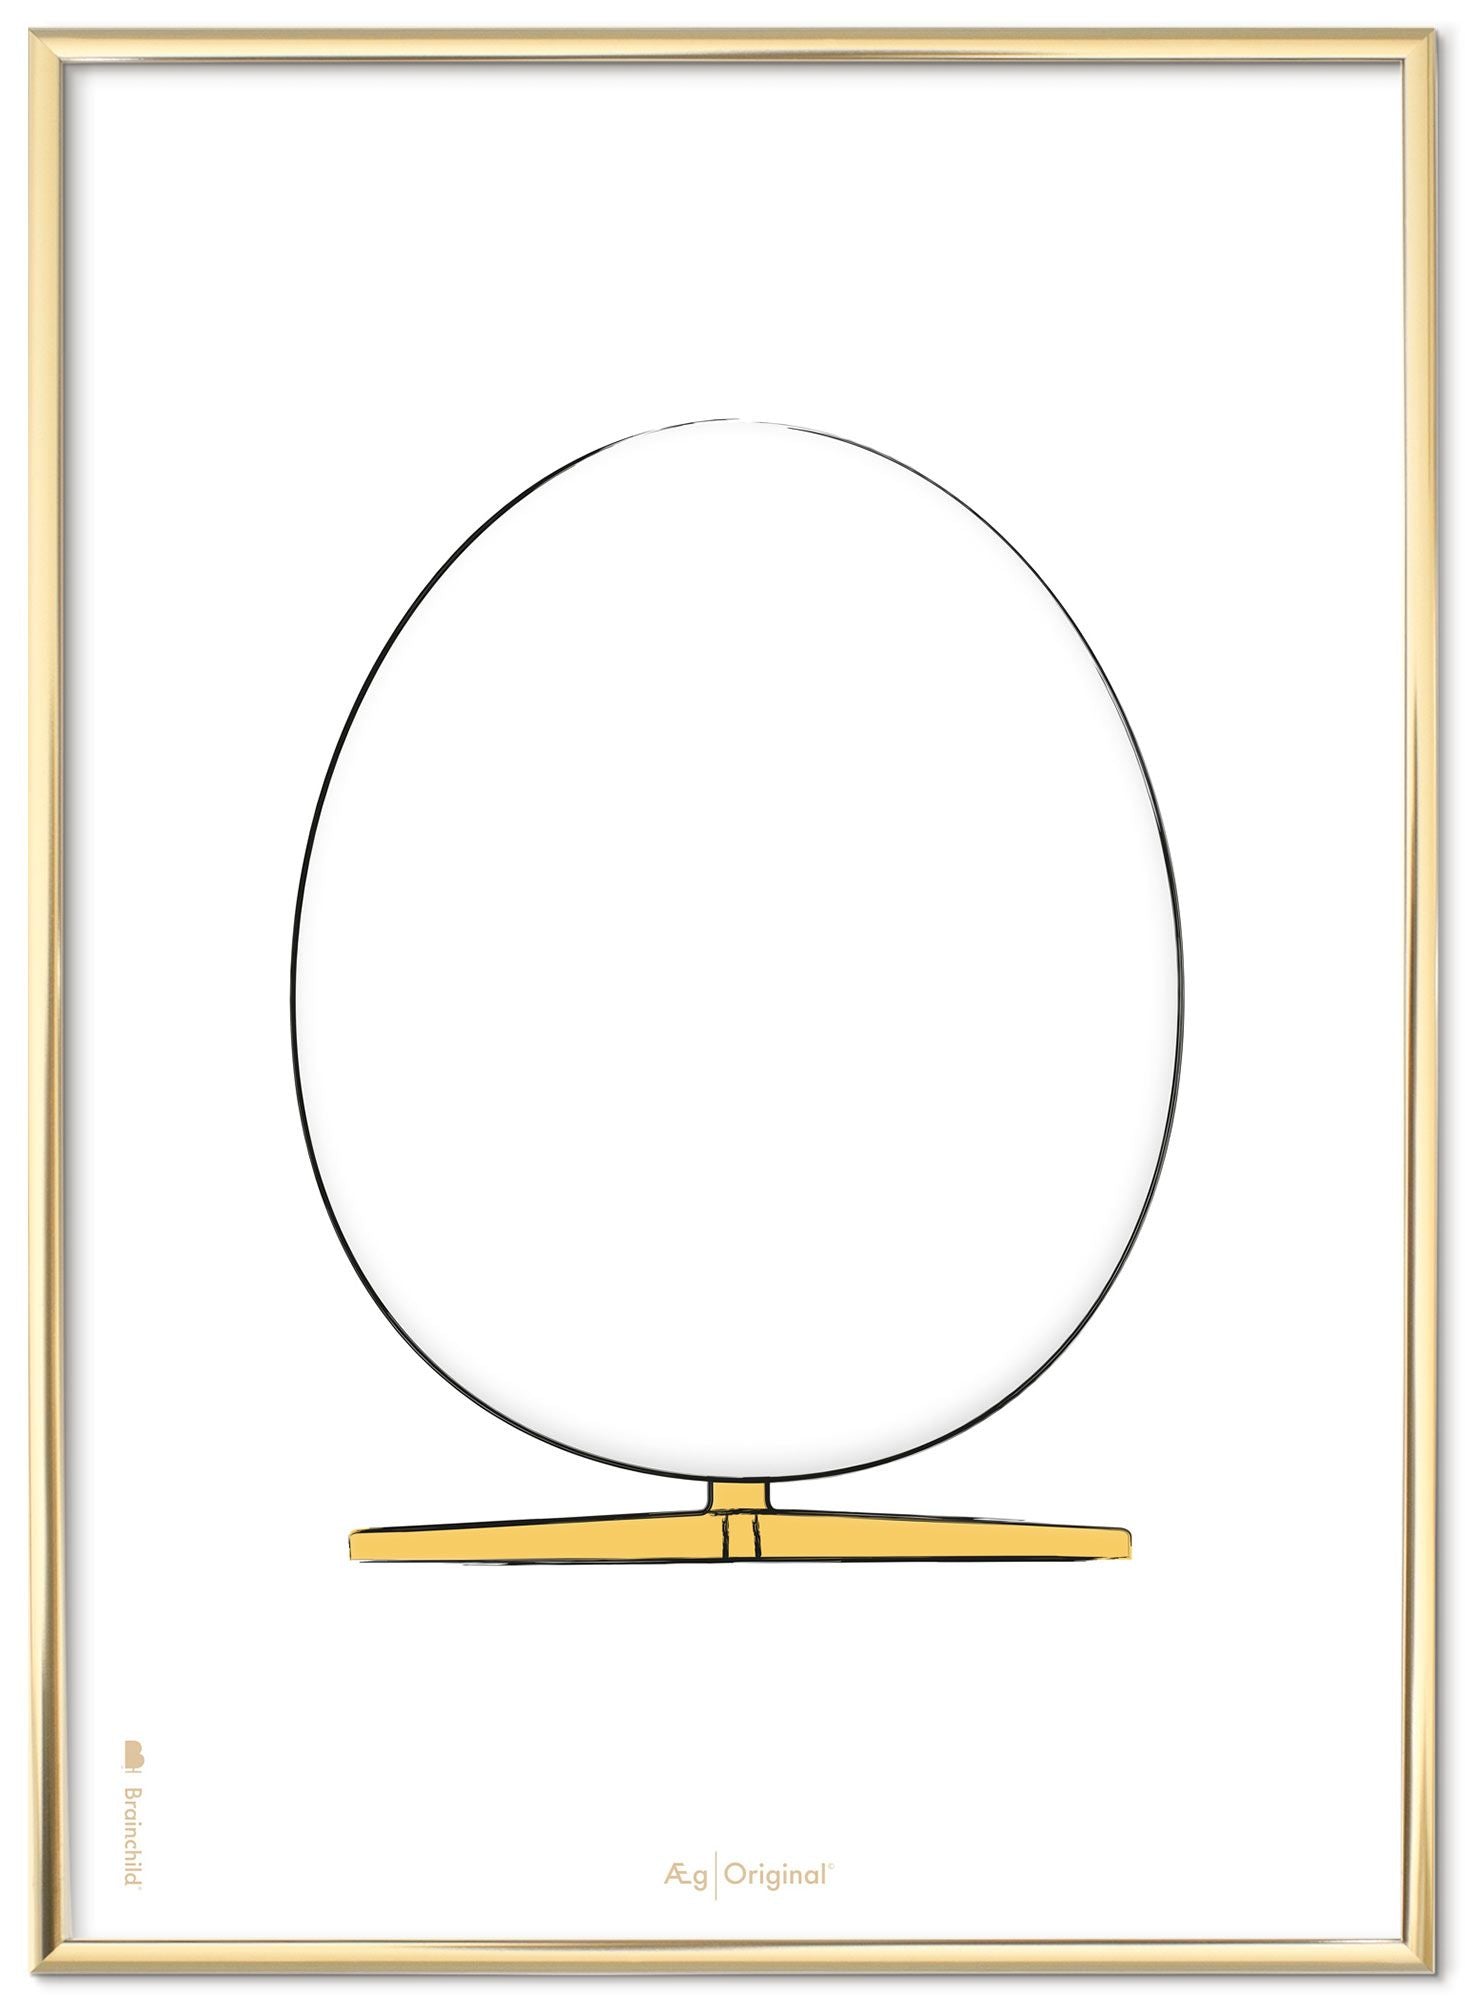 Brainchild The Egg Design Sketch Affisch Frame Made av mässingsfärgad metall 30x40 cm, vit bakgrund